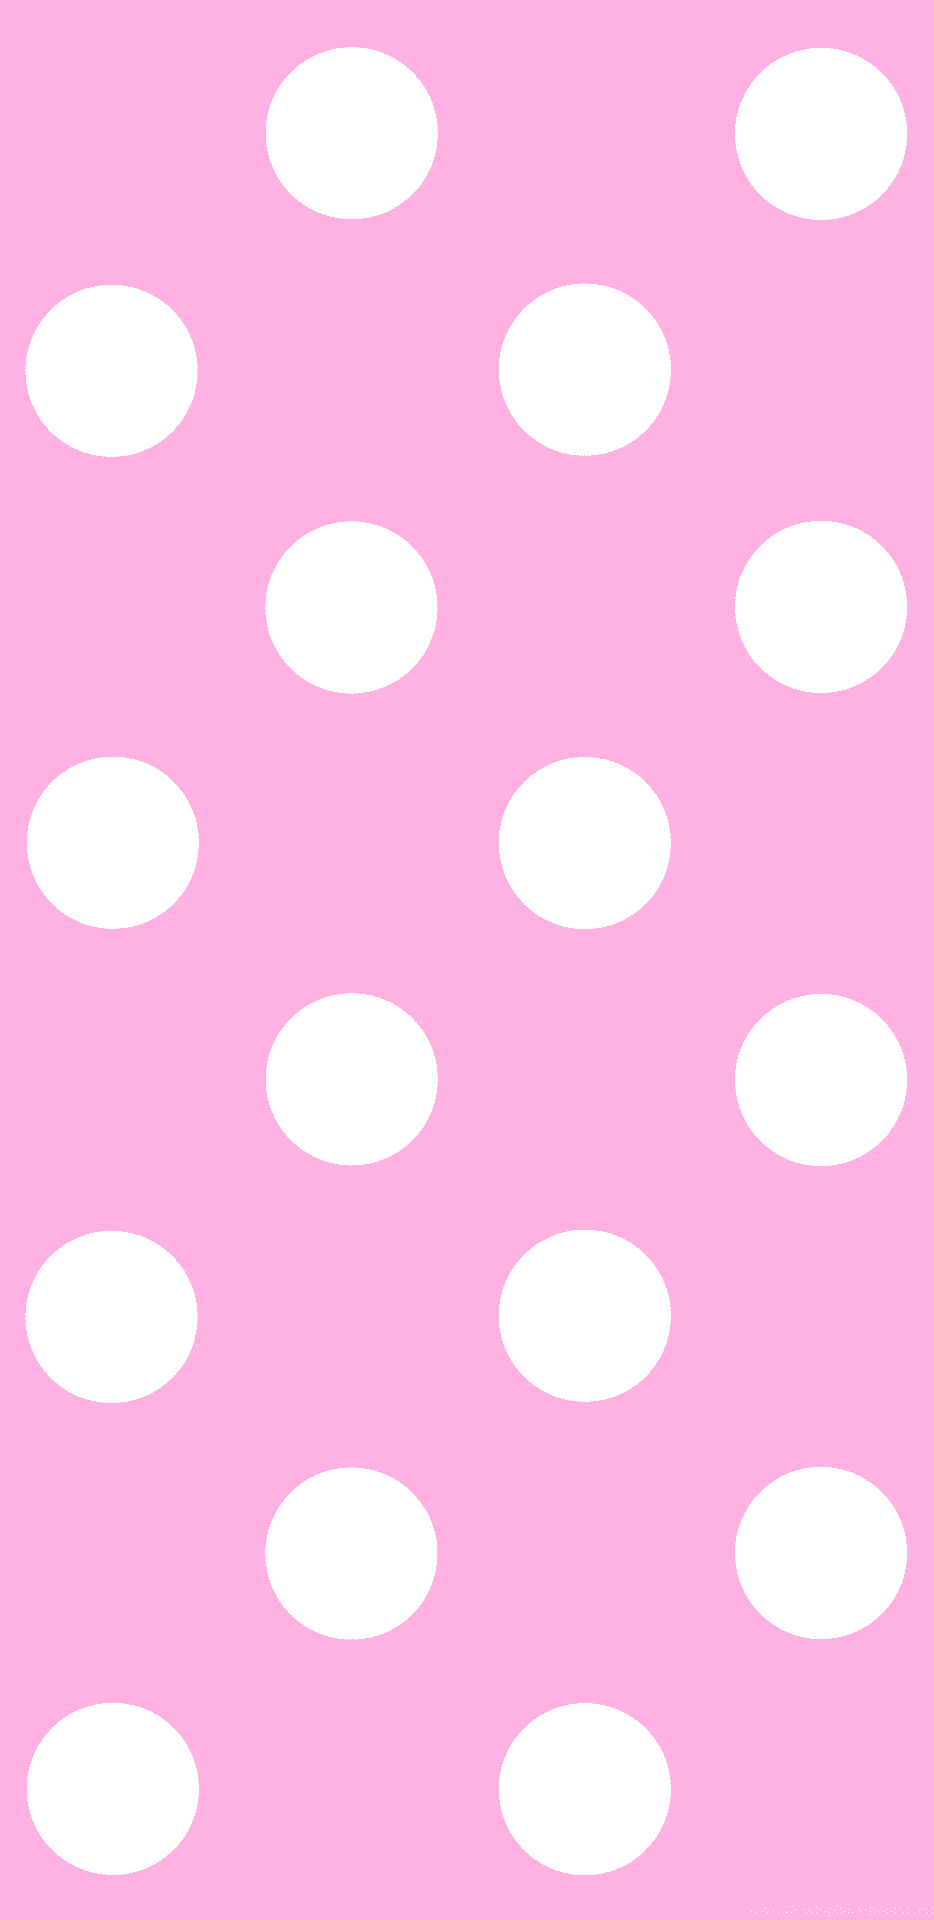 A cheerful pink polka dot background